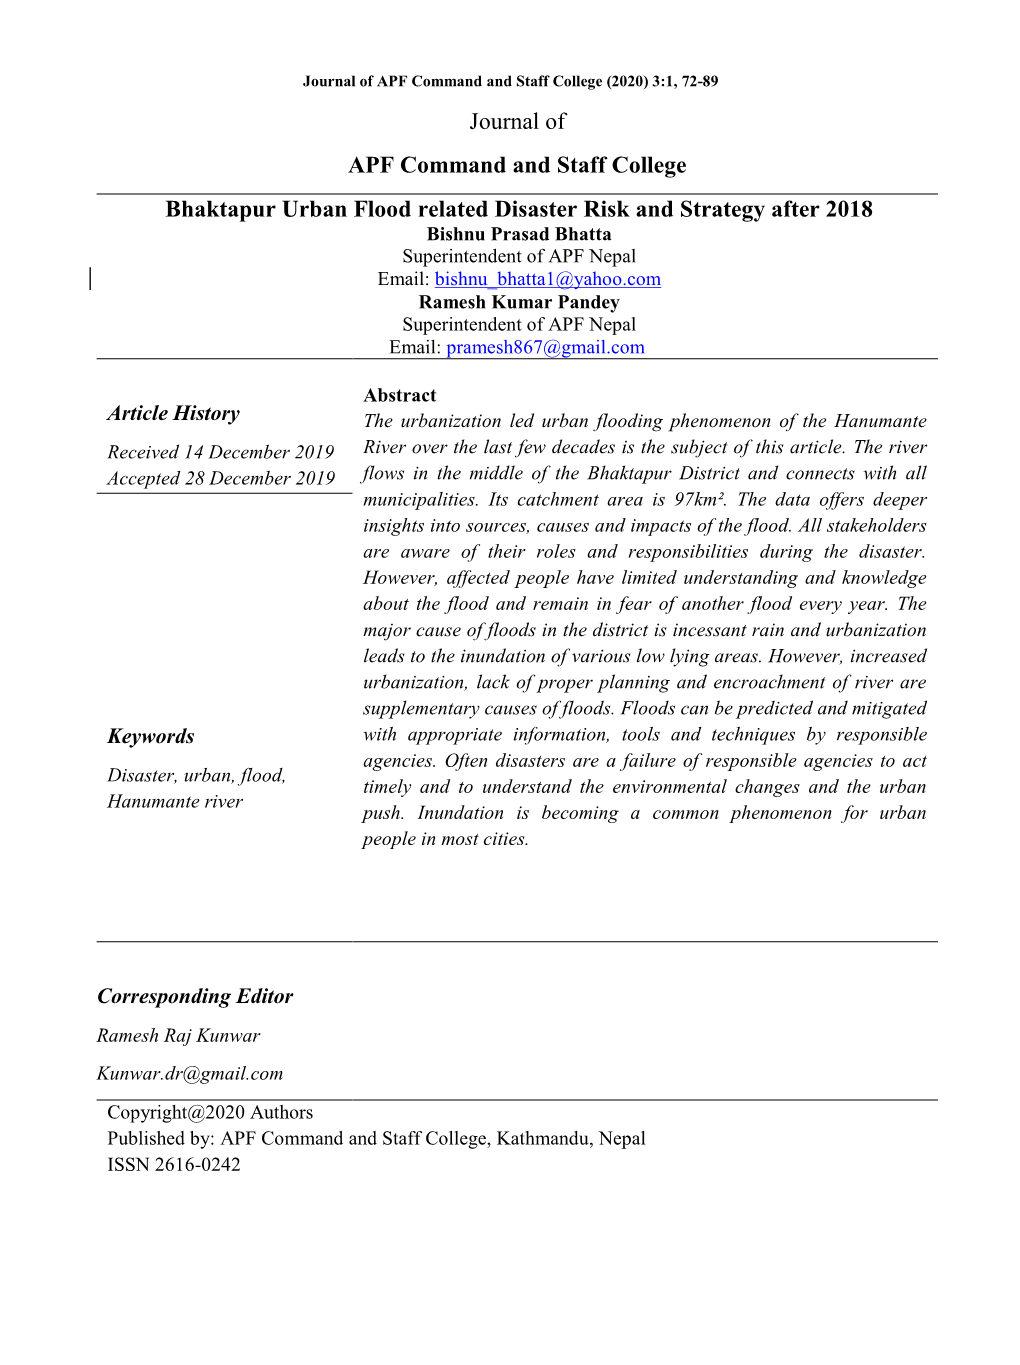 Journal of APF Command and Staff College Bhaktapur Urban Flood